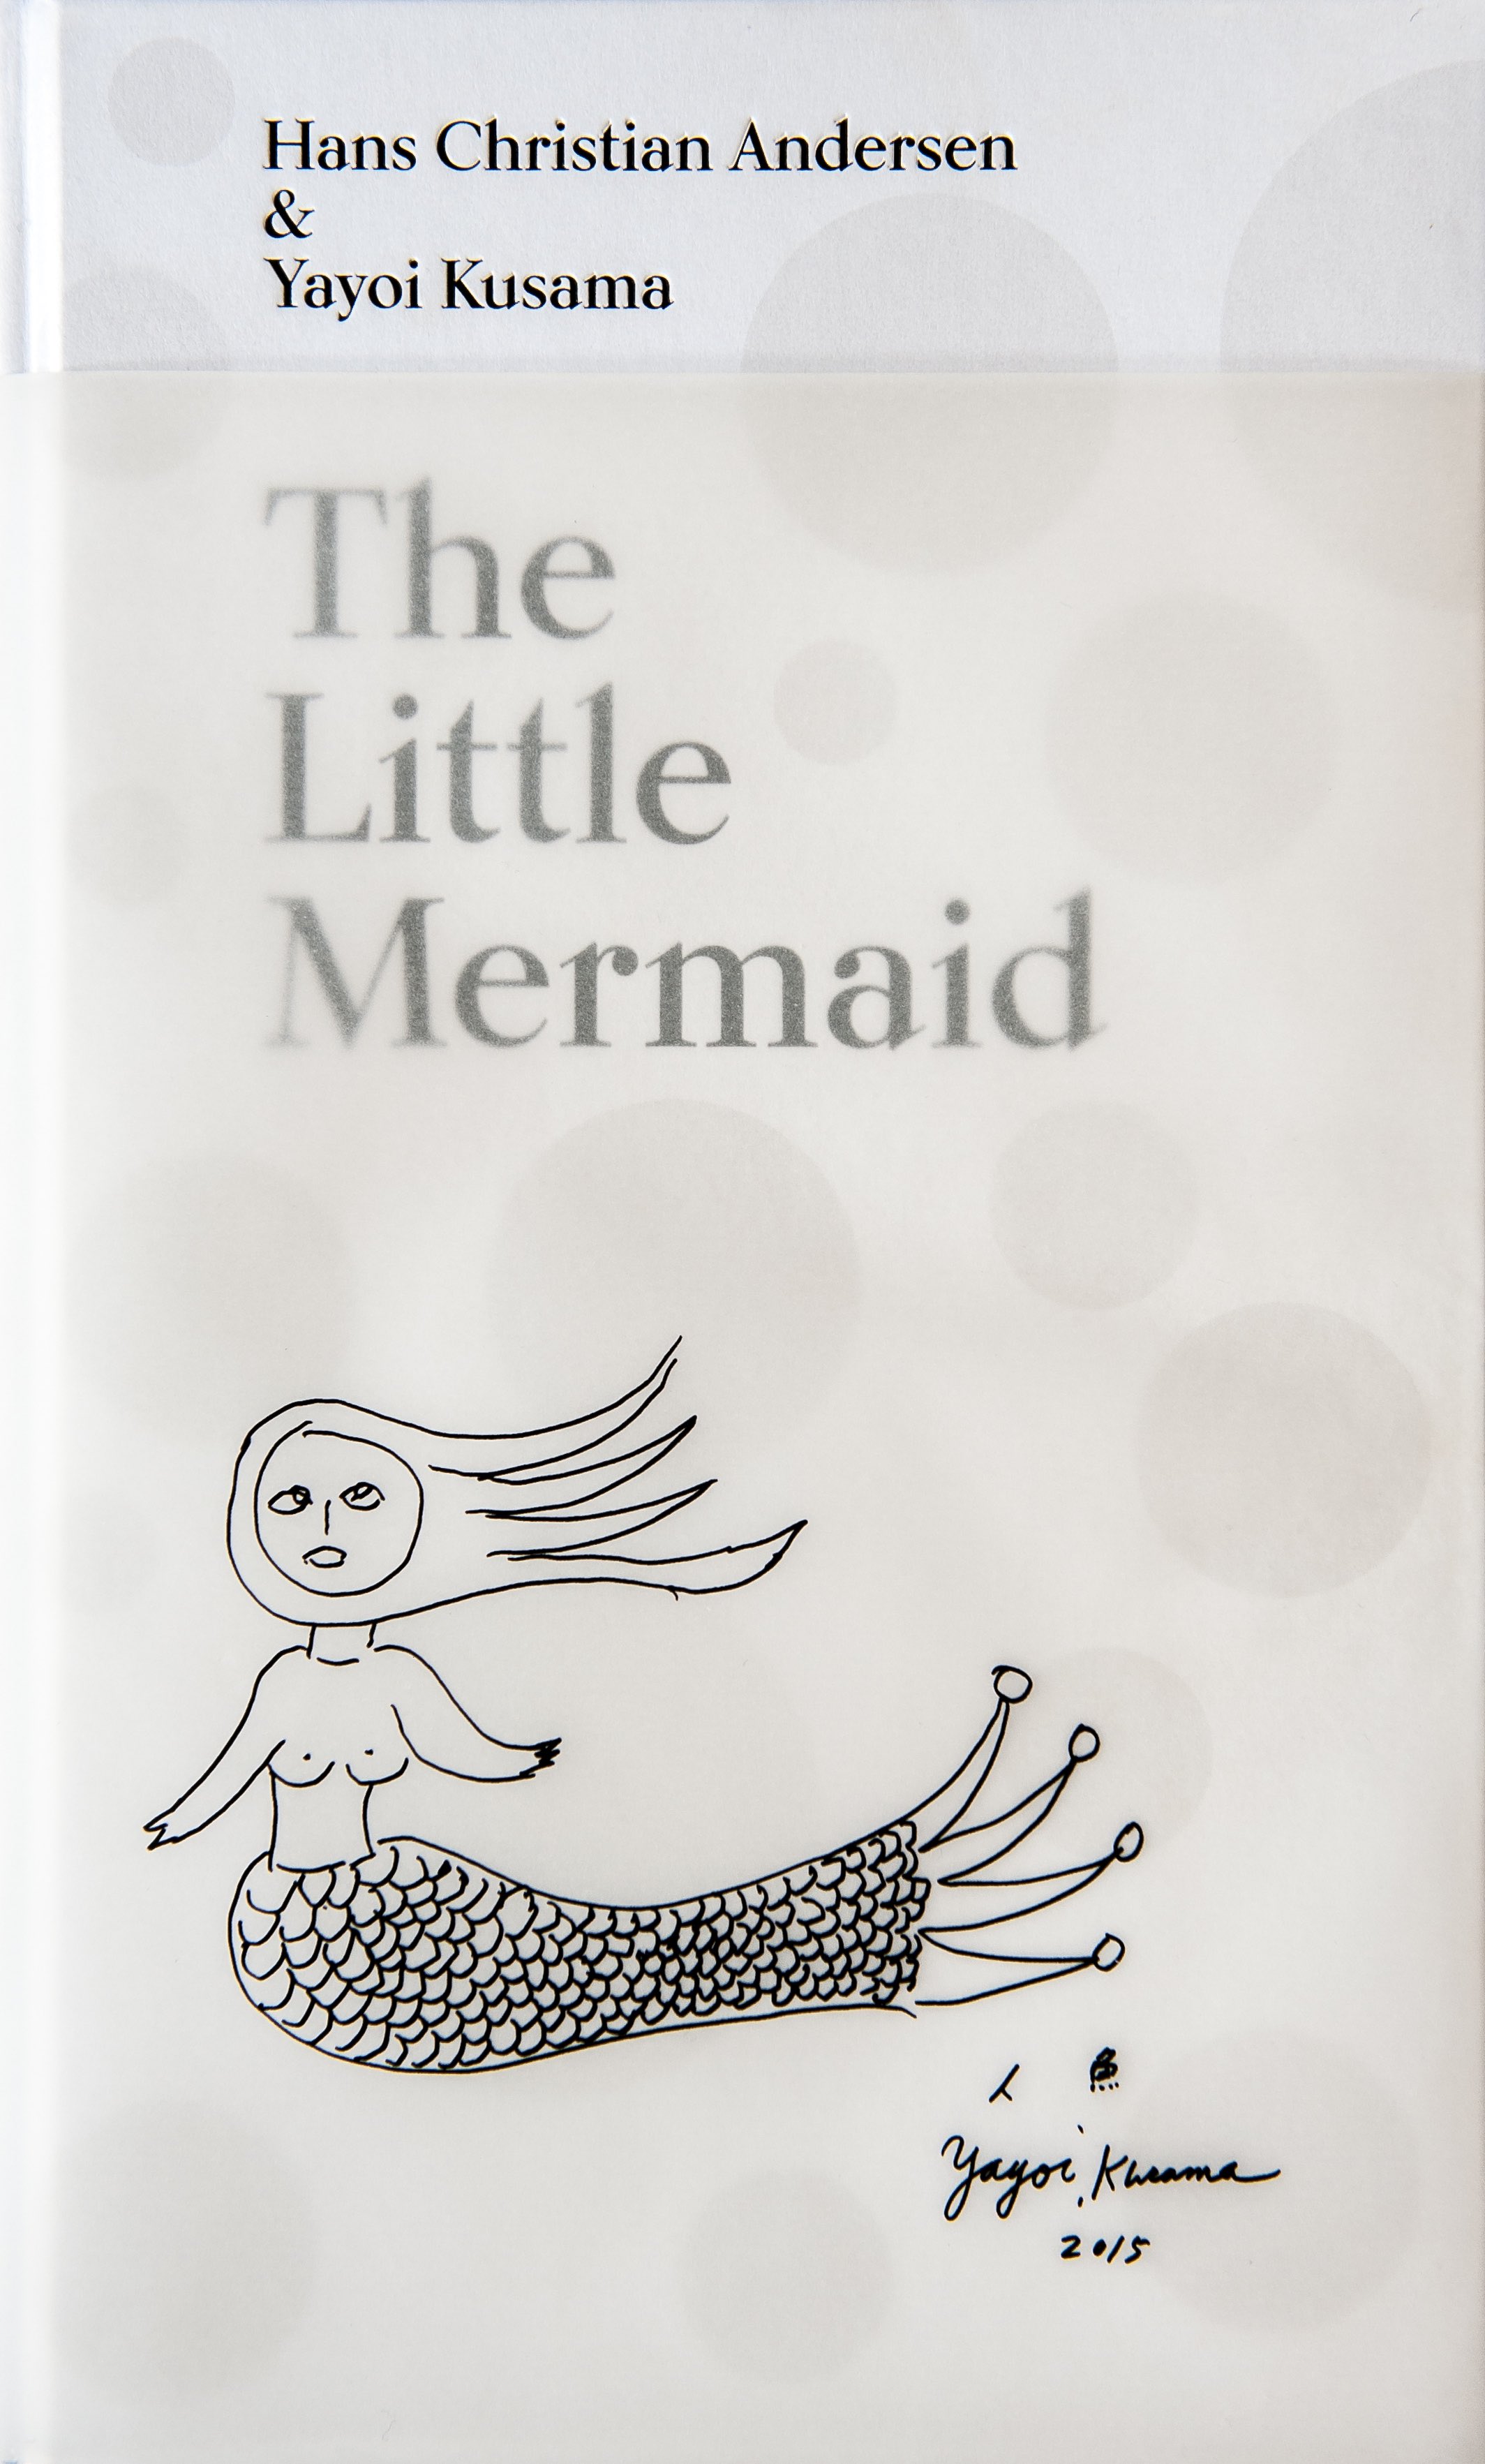 The little mermaid by H.C. Andersen & Yayoi Kusama